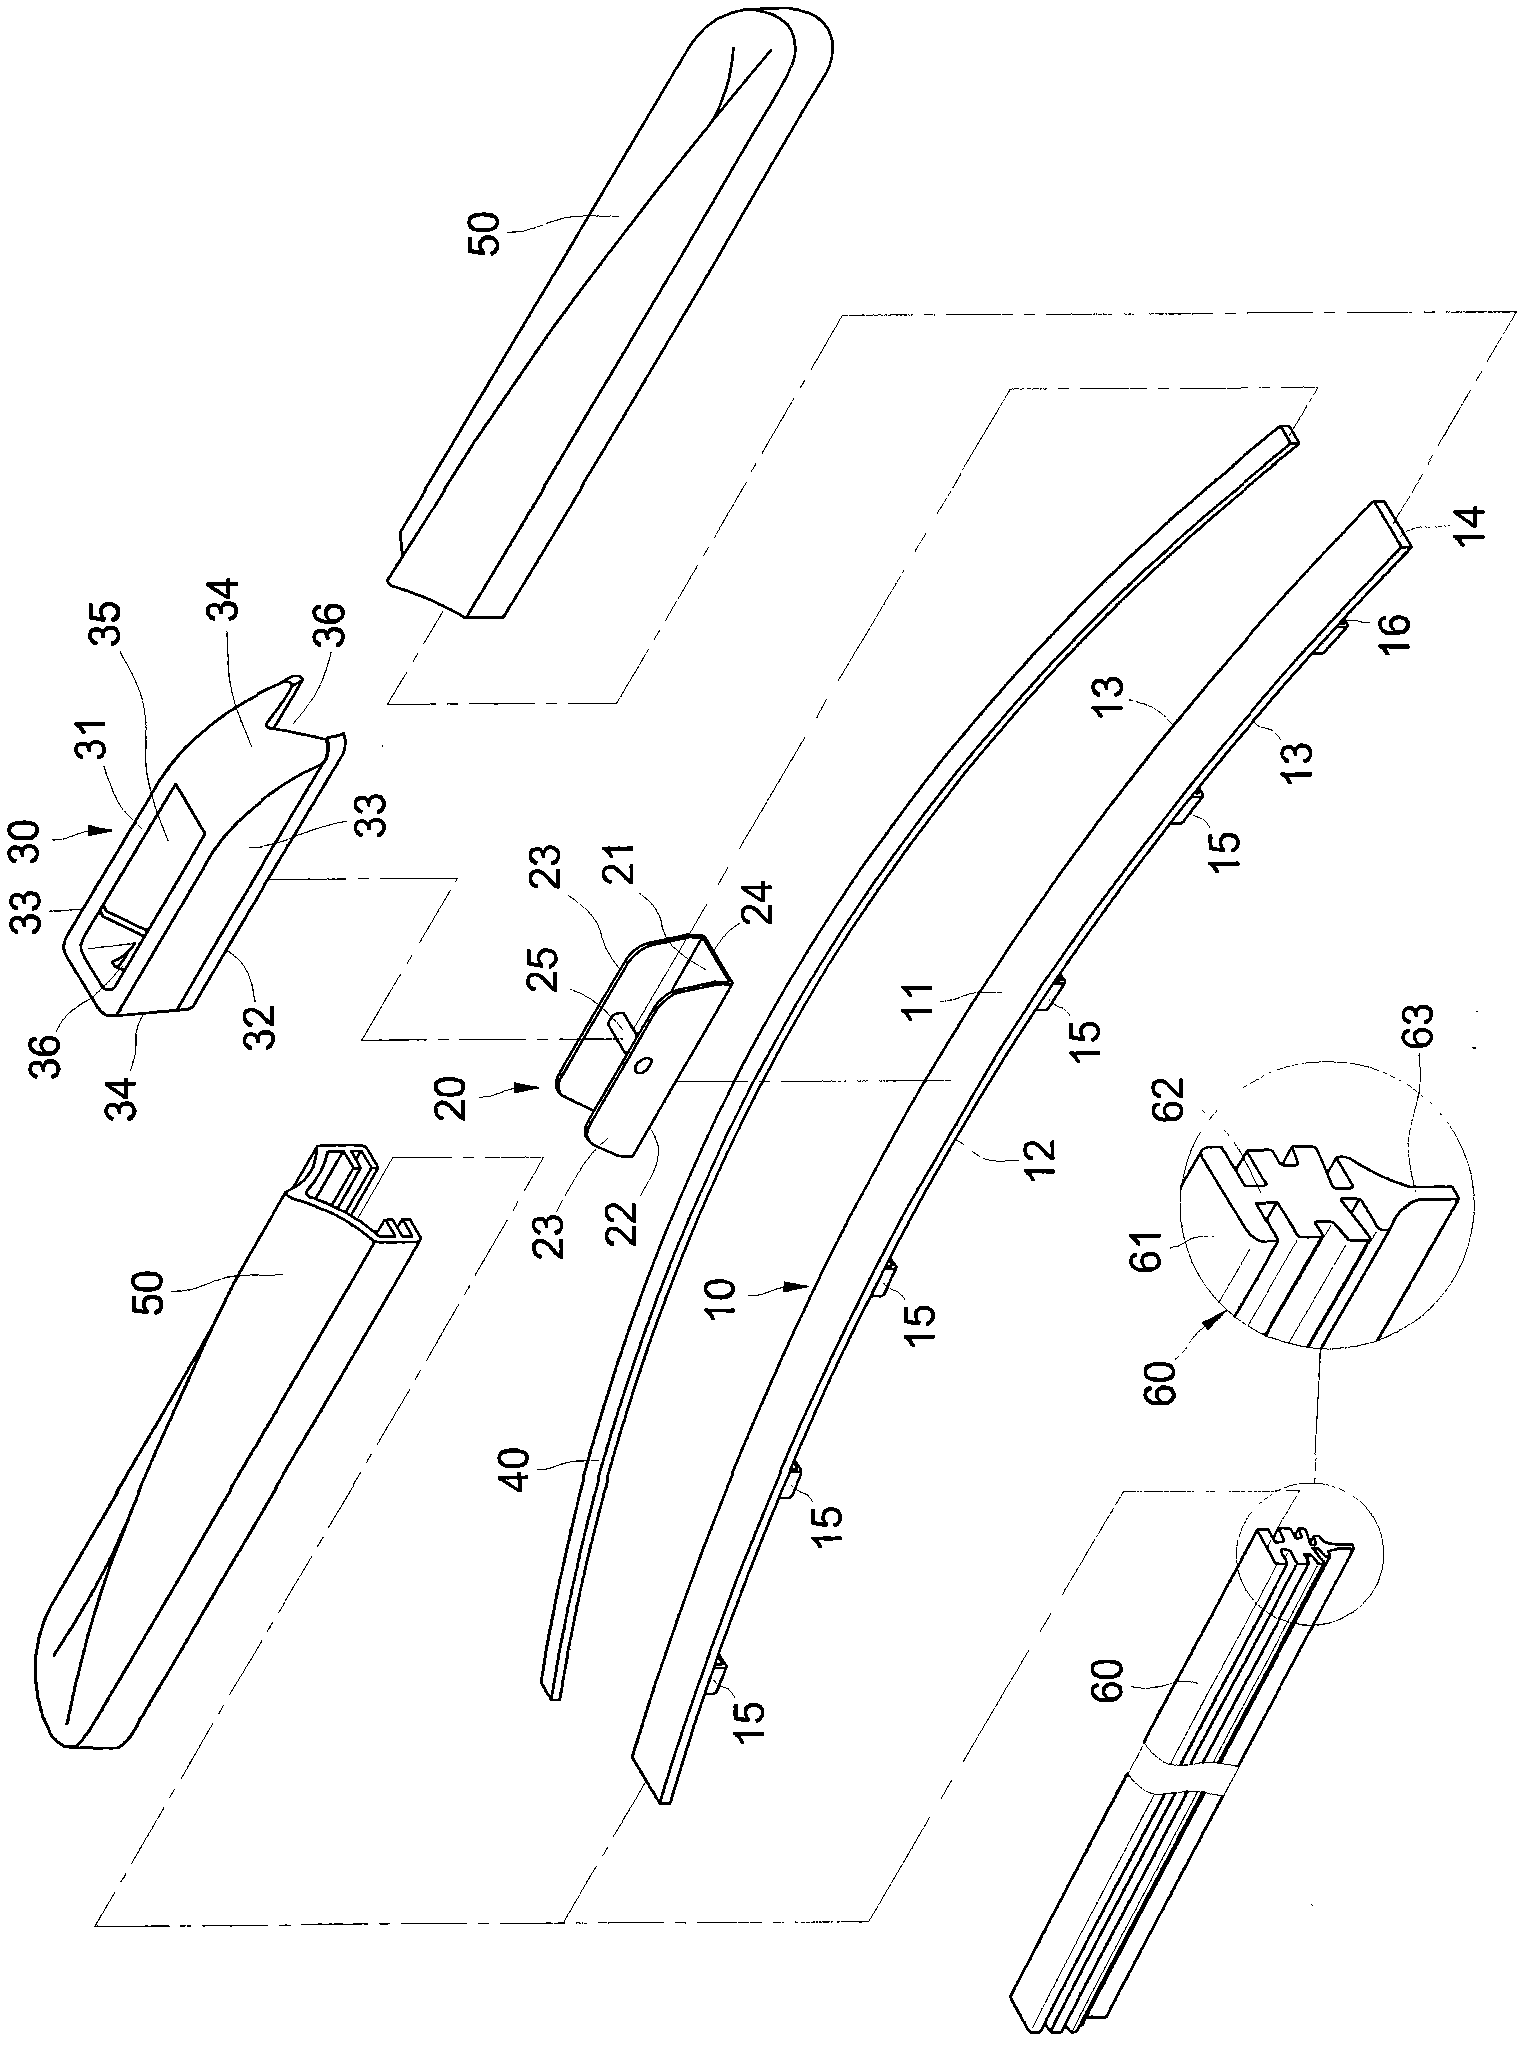 Docile non-bracket type windscreen wiper structure